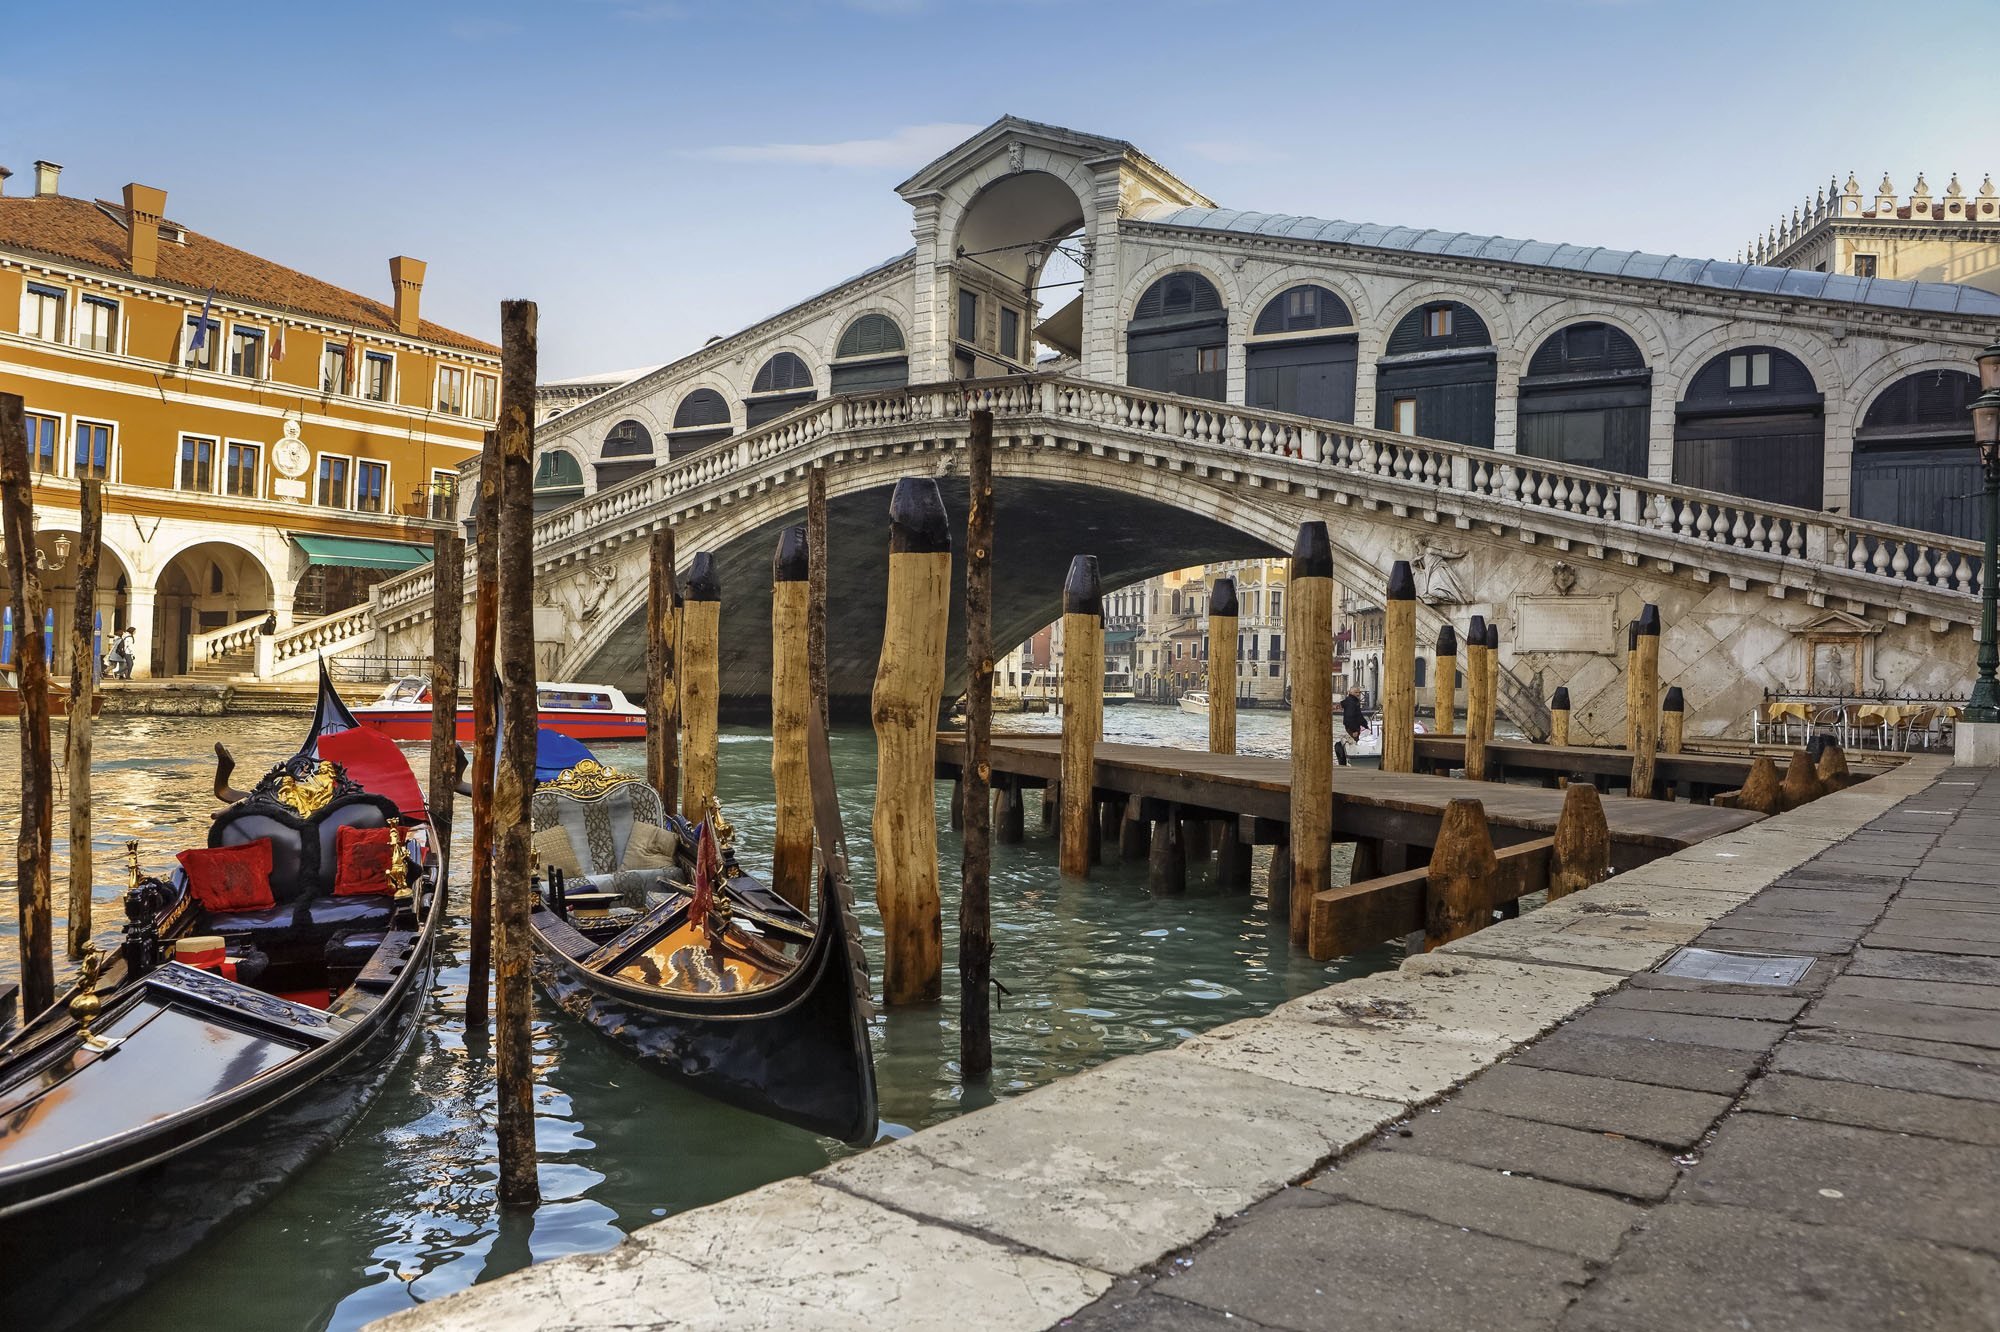 Река в венеции. Мост Риальто, Венеция, Италия. Мост Риальто и Гранд-канал в Венеции. Архитектура Венеции мост Риальто. Мост Риальто достопримечательности Венеции.